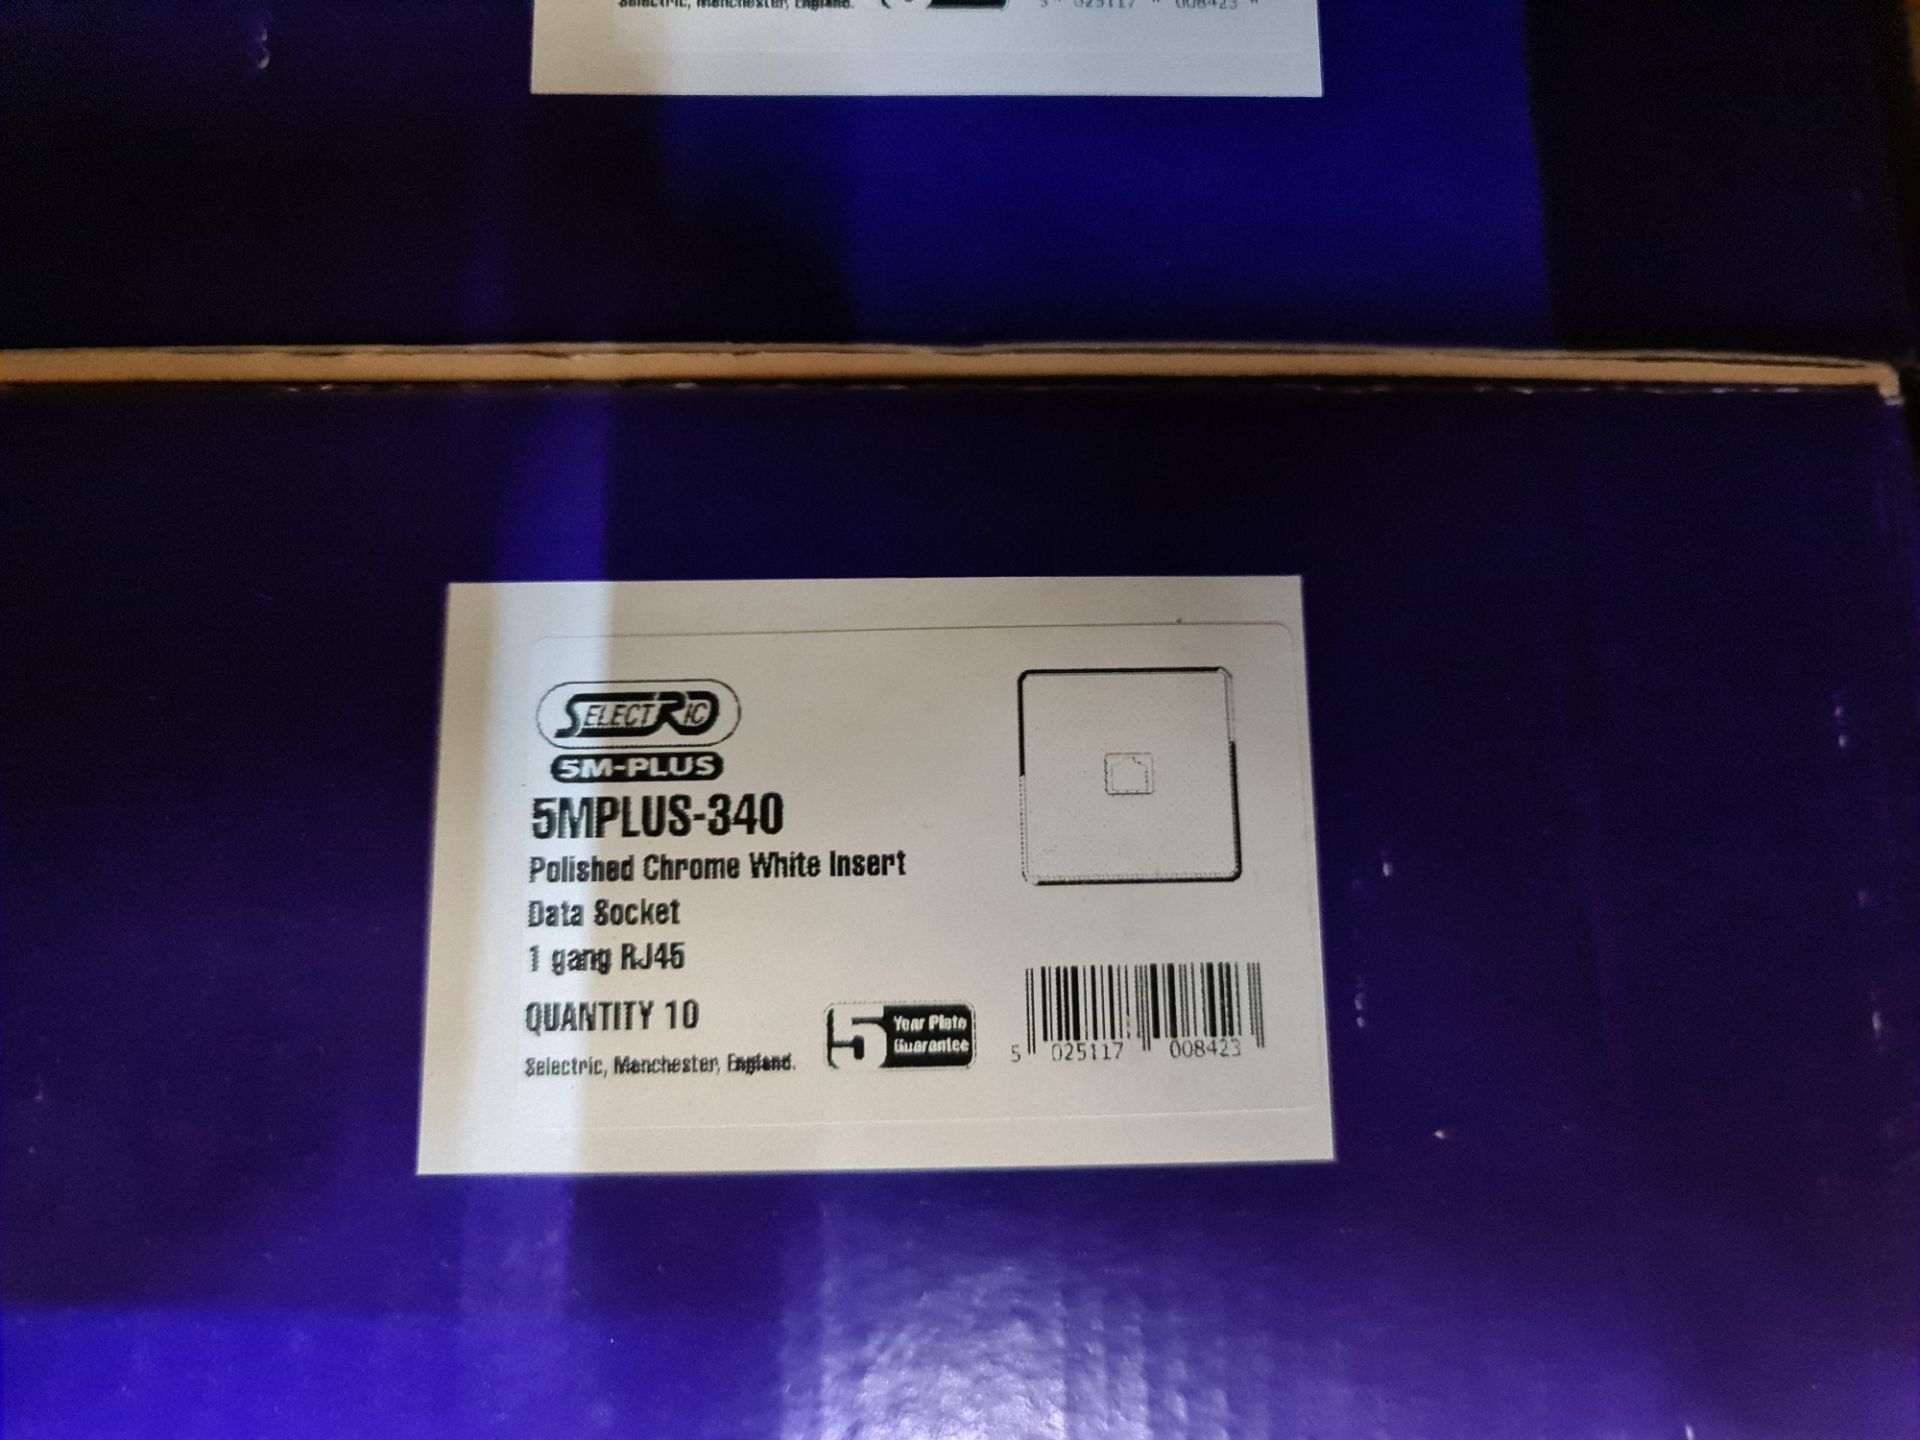 50 off (1 carton) Selectric 5M-PLUS 340 polished chrome 1 gang RJ45 data socket - white insert